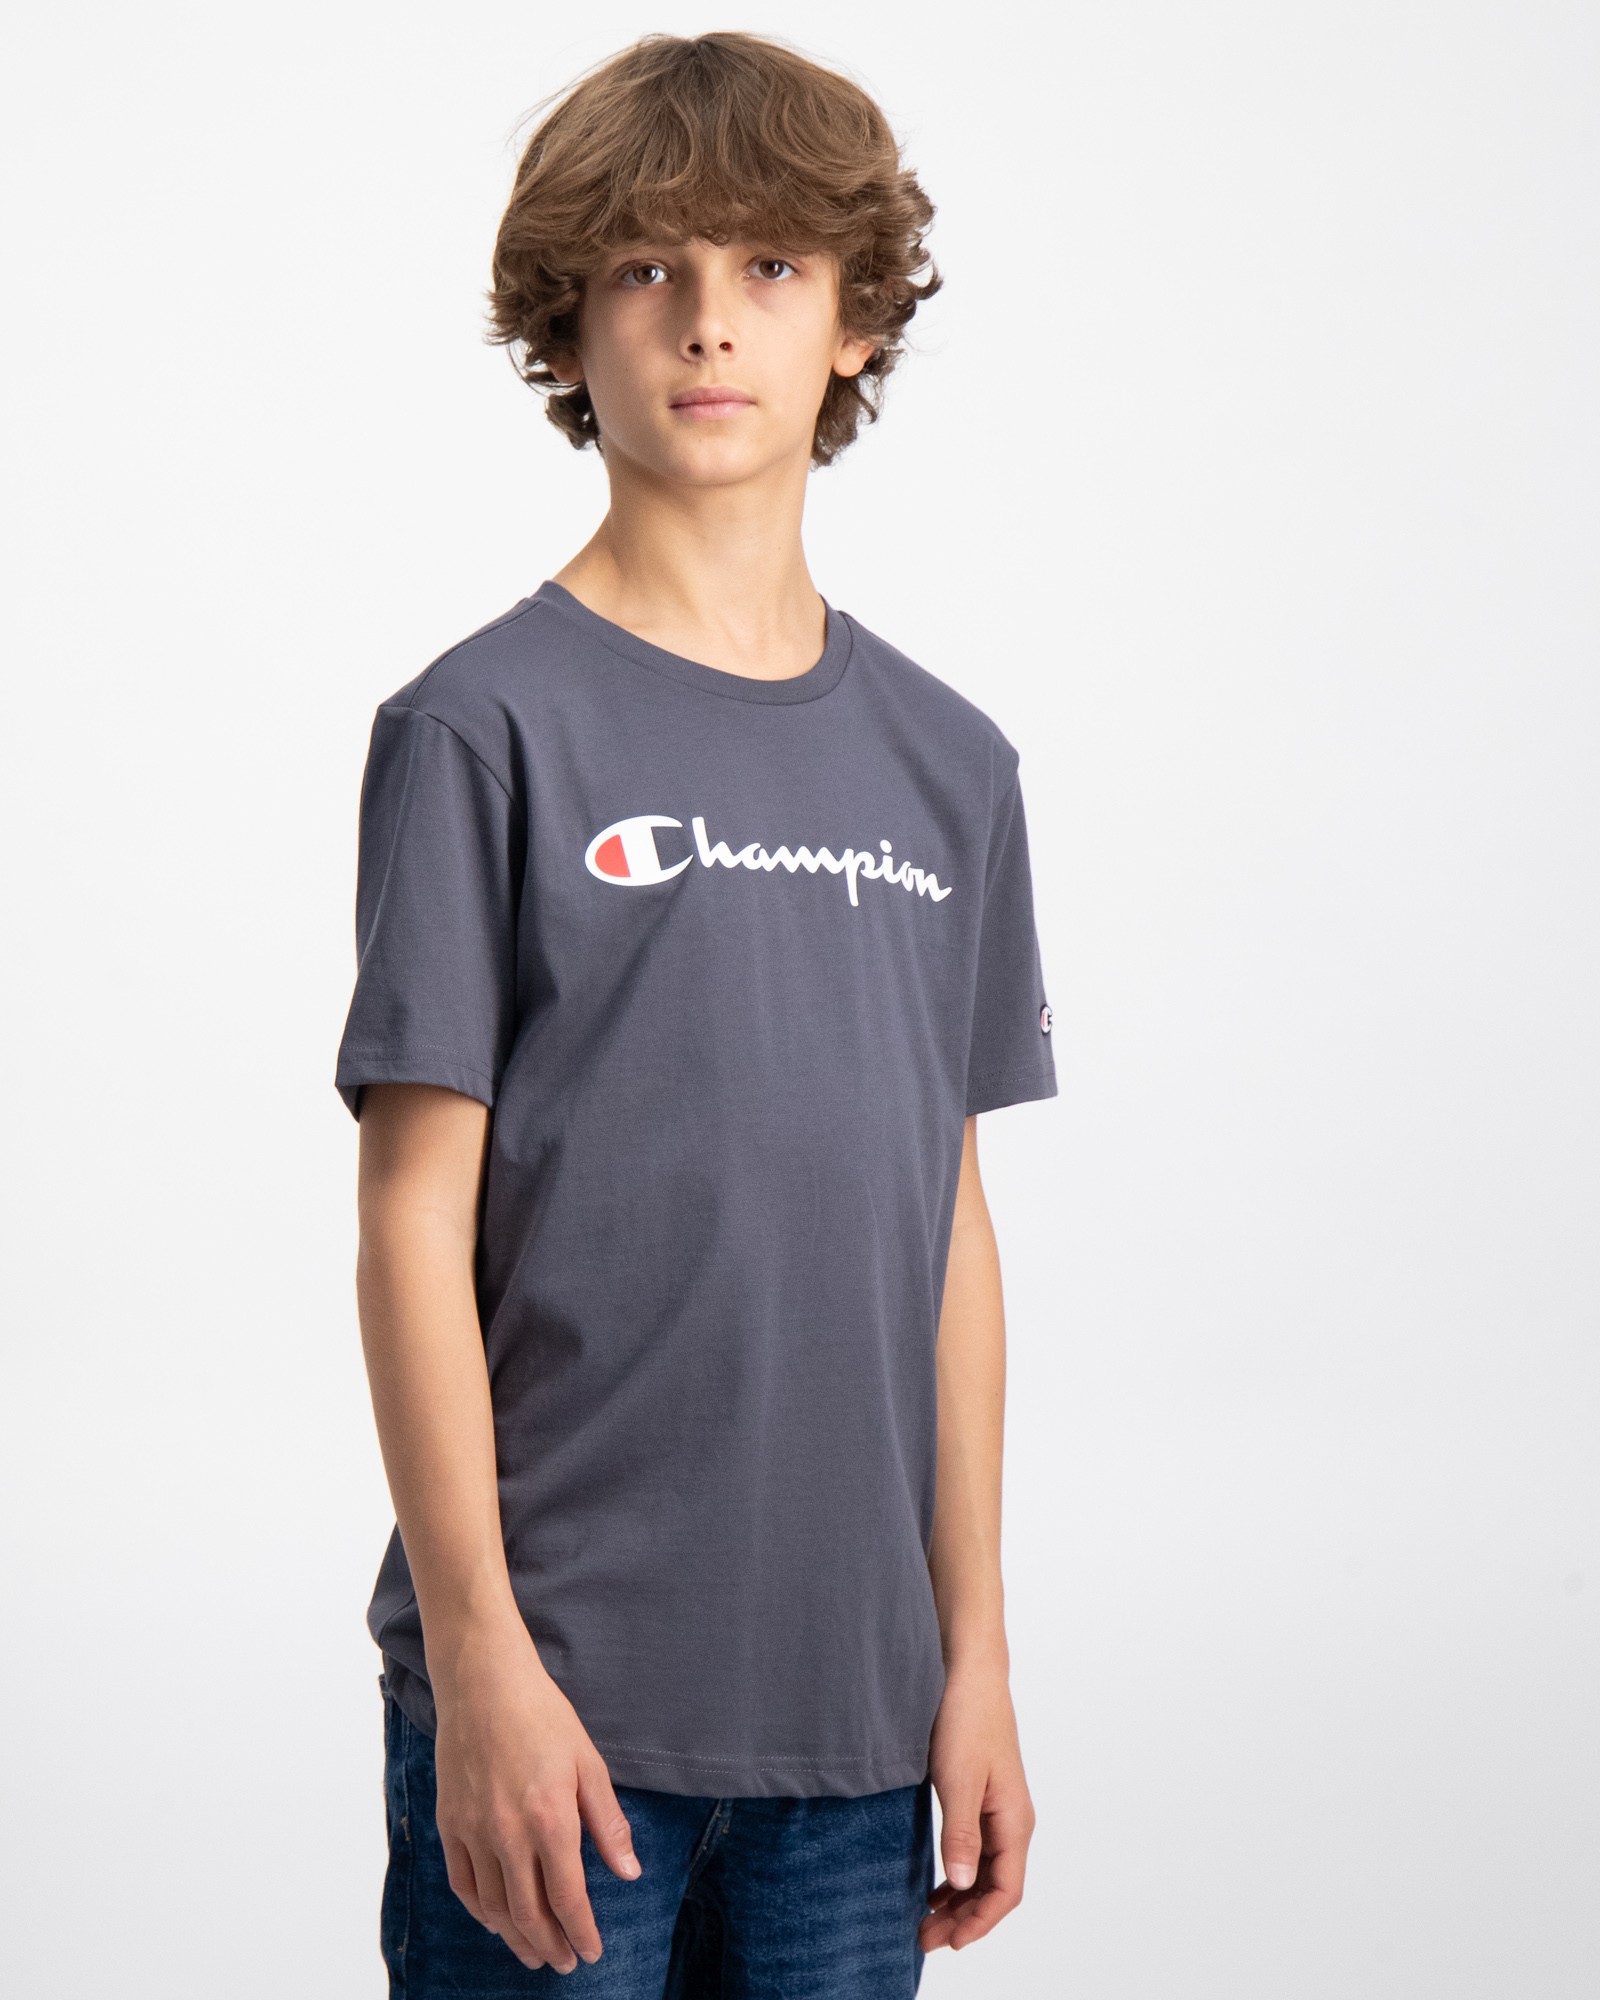 Grau Crewneck Jungen T-Shirt Store Brand Kids für 